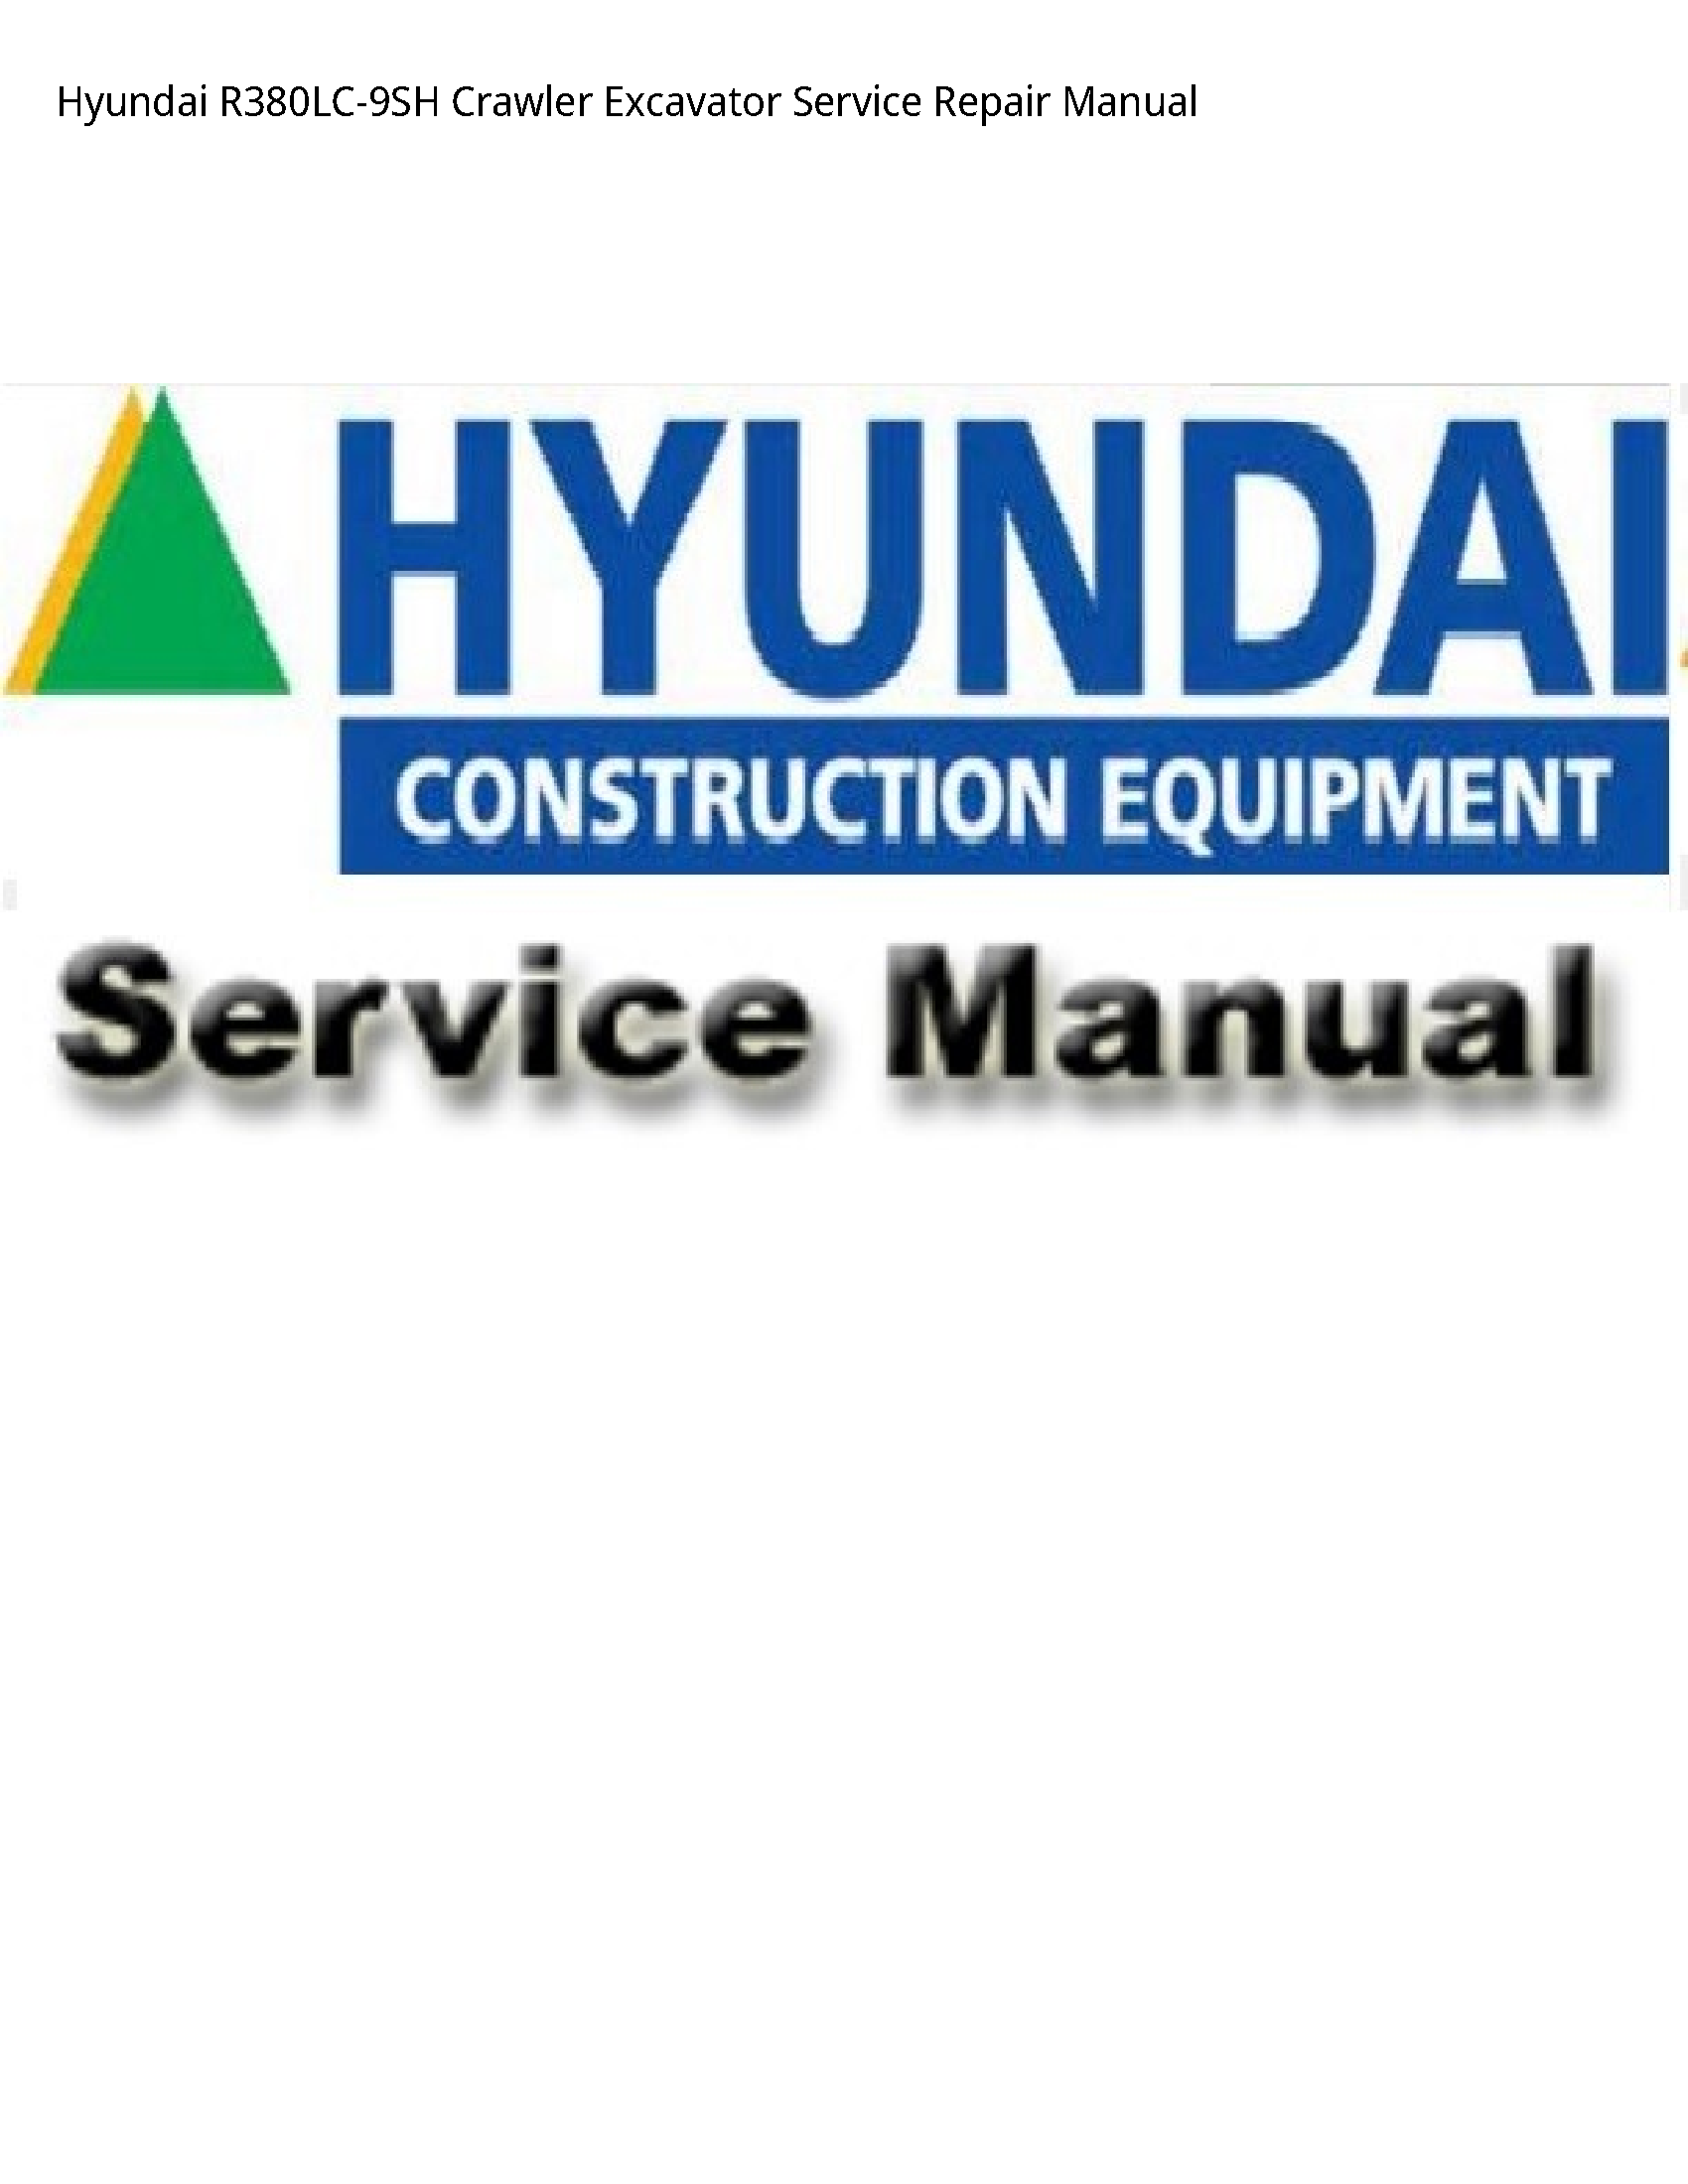 Hyundai R380LC-9SH Crawler Excavator manual